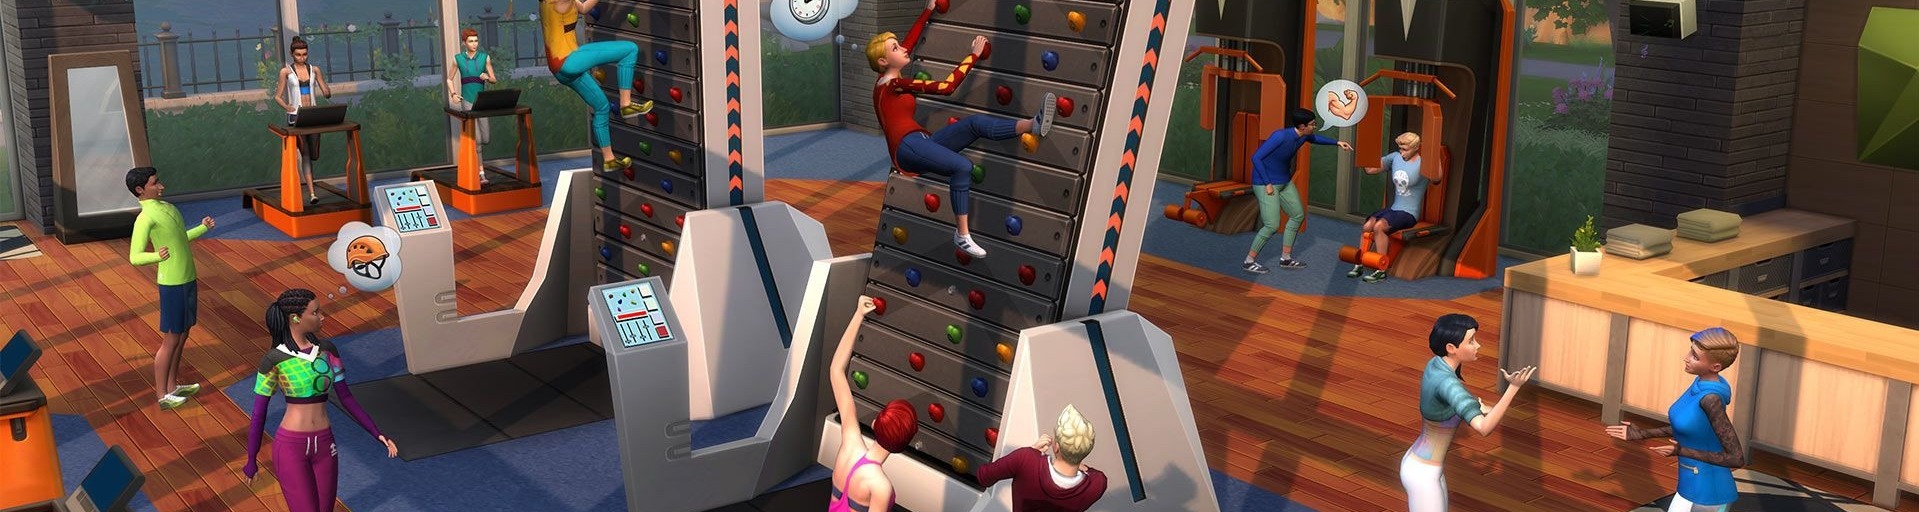 The Sims 4: Fitness Stuff Origin CD Key (Game keys) for free!